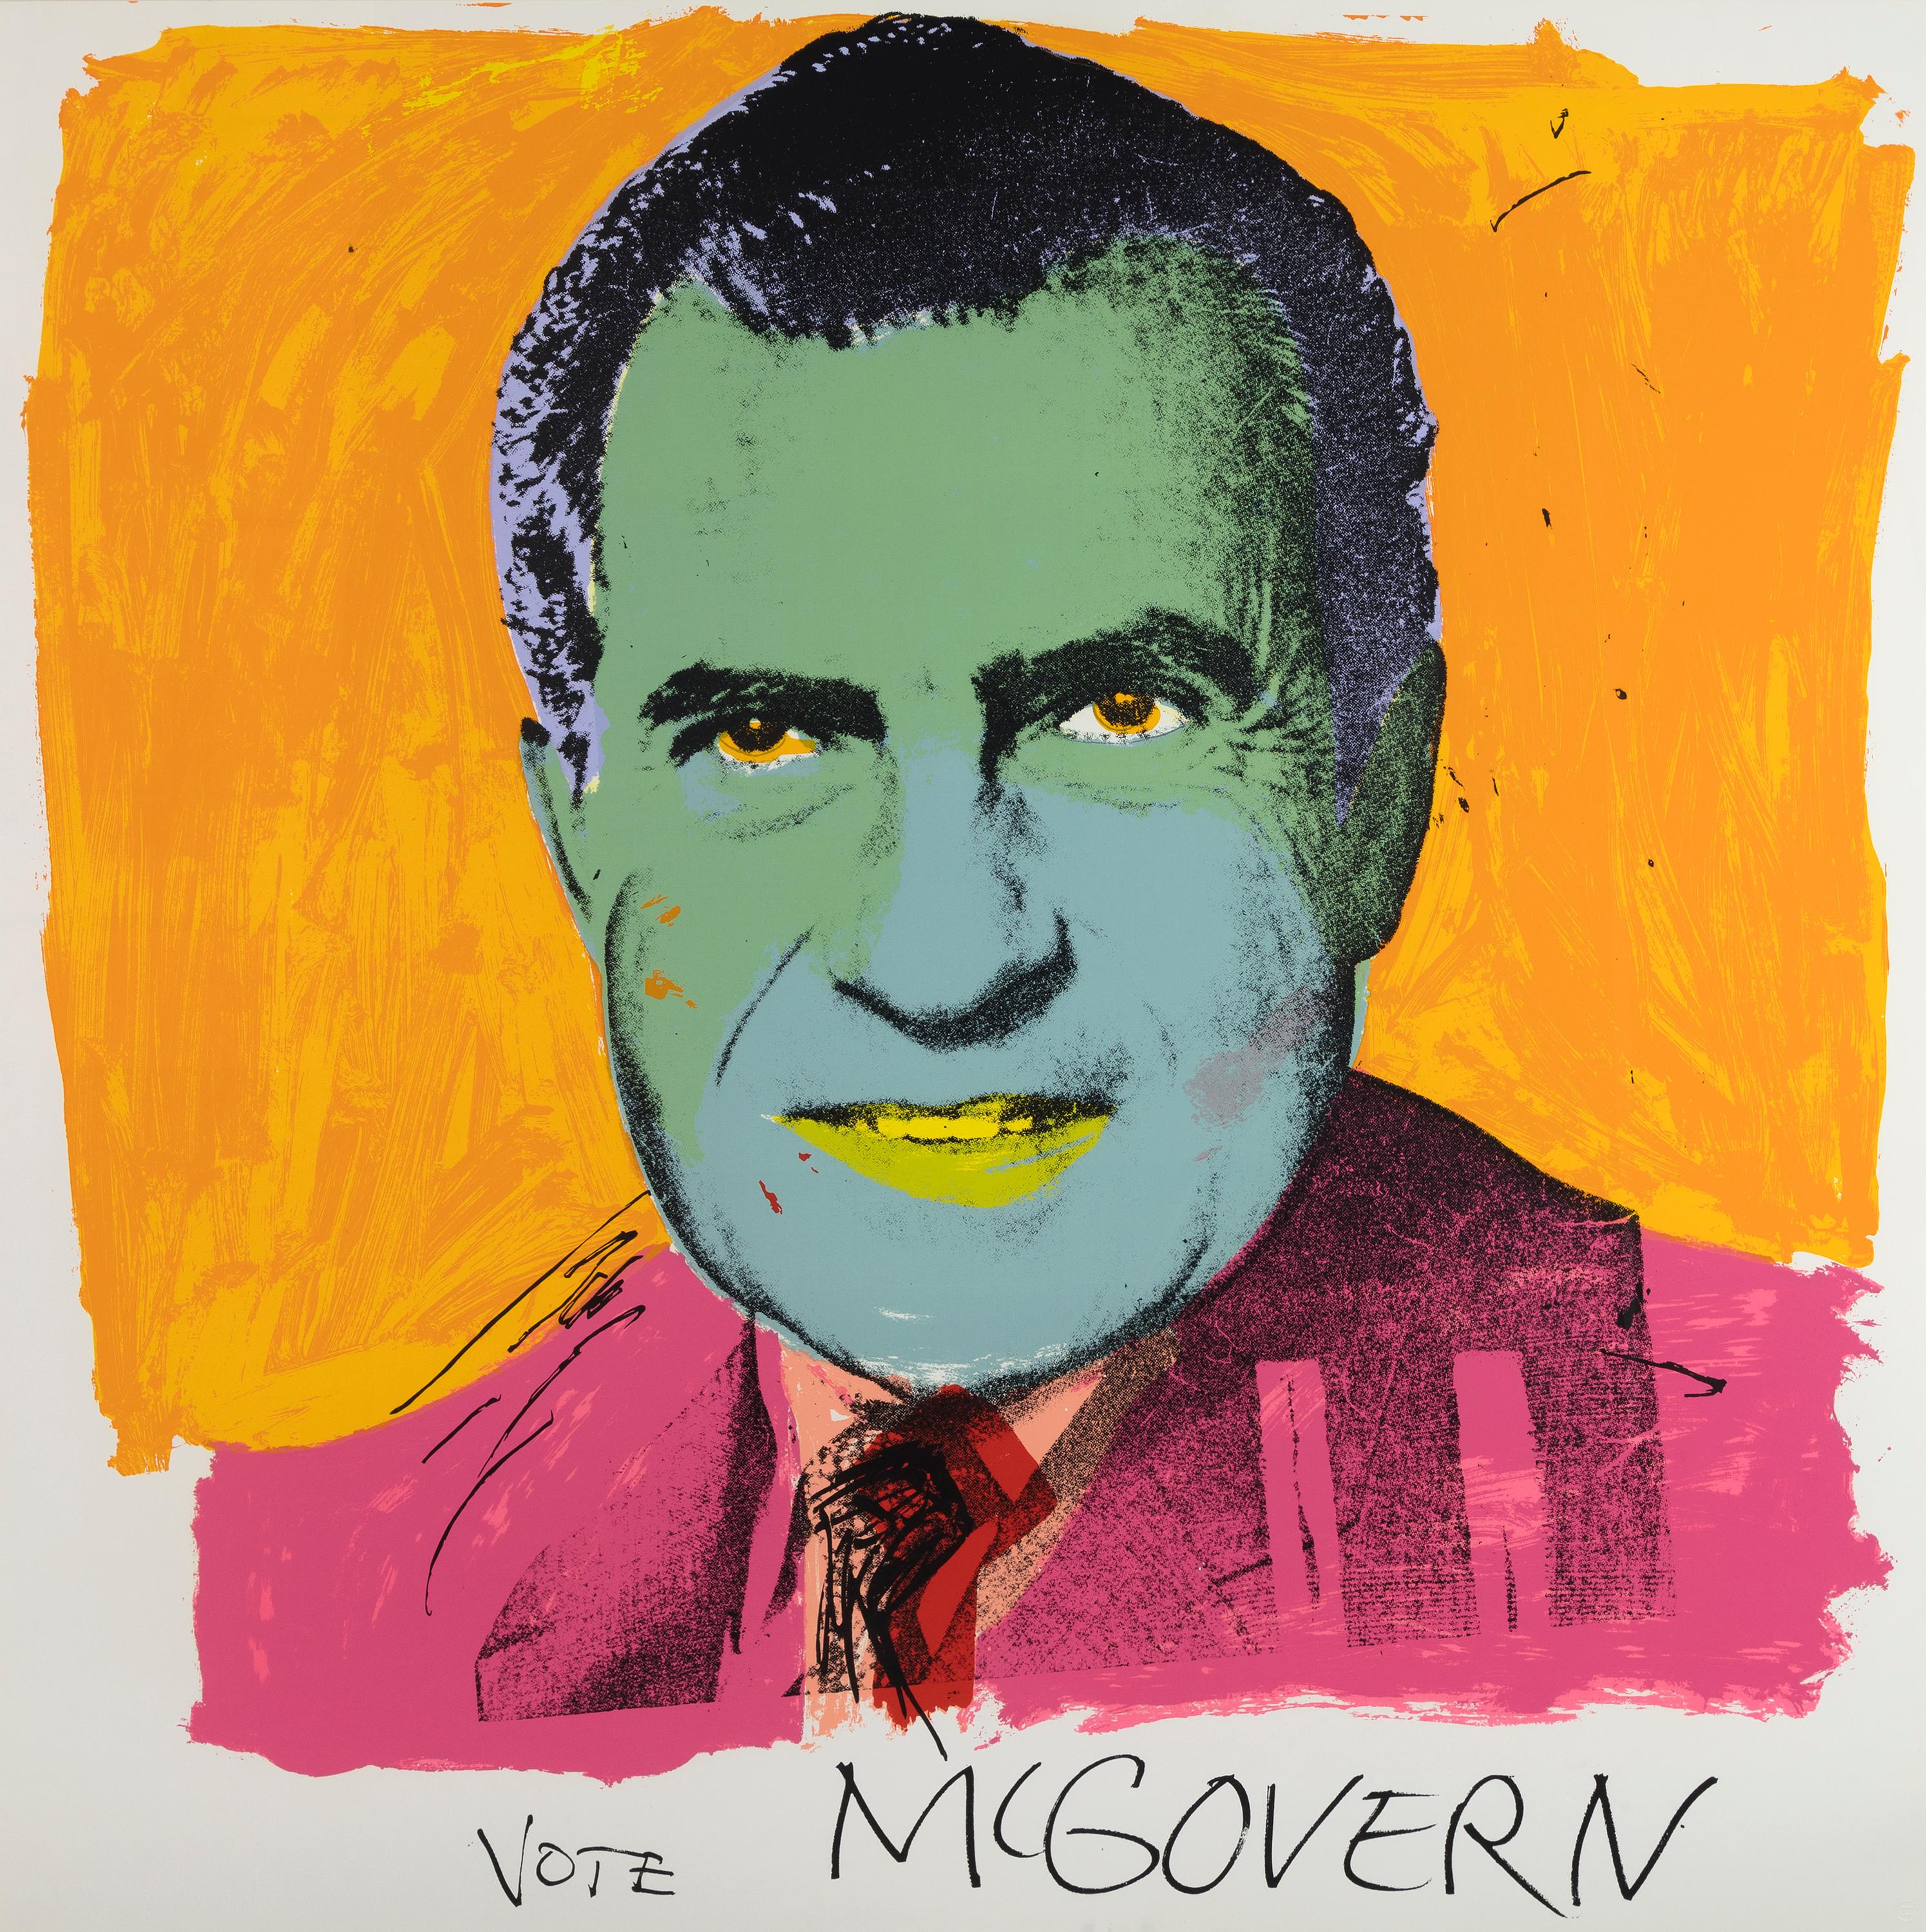 Andy Warhol Portrait Print - Vote McGovern